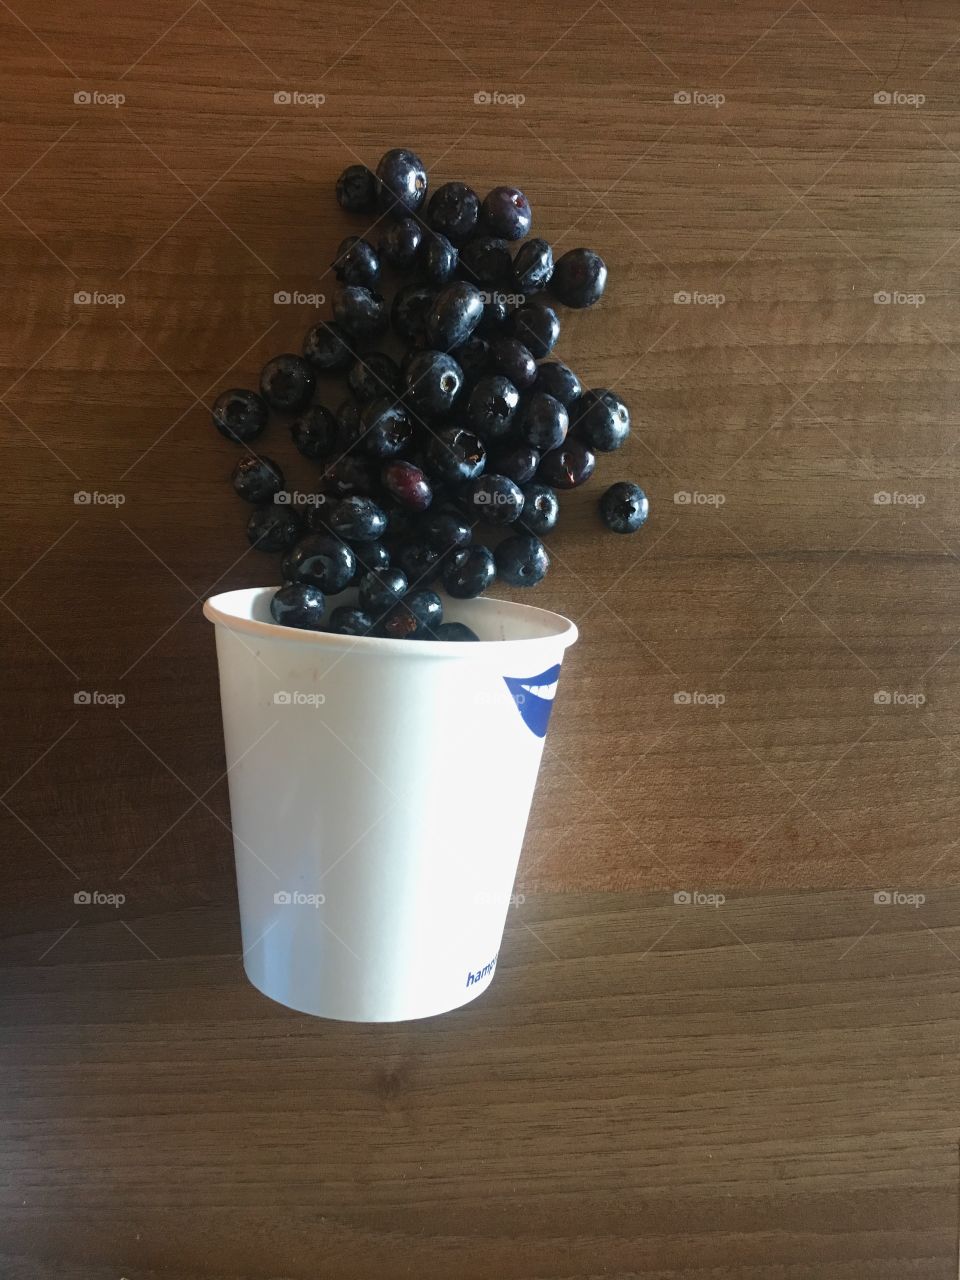 Pot of blueberries